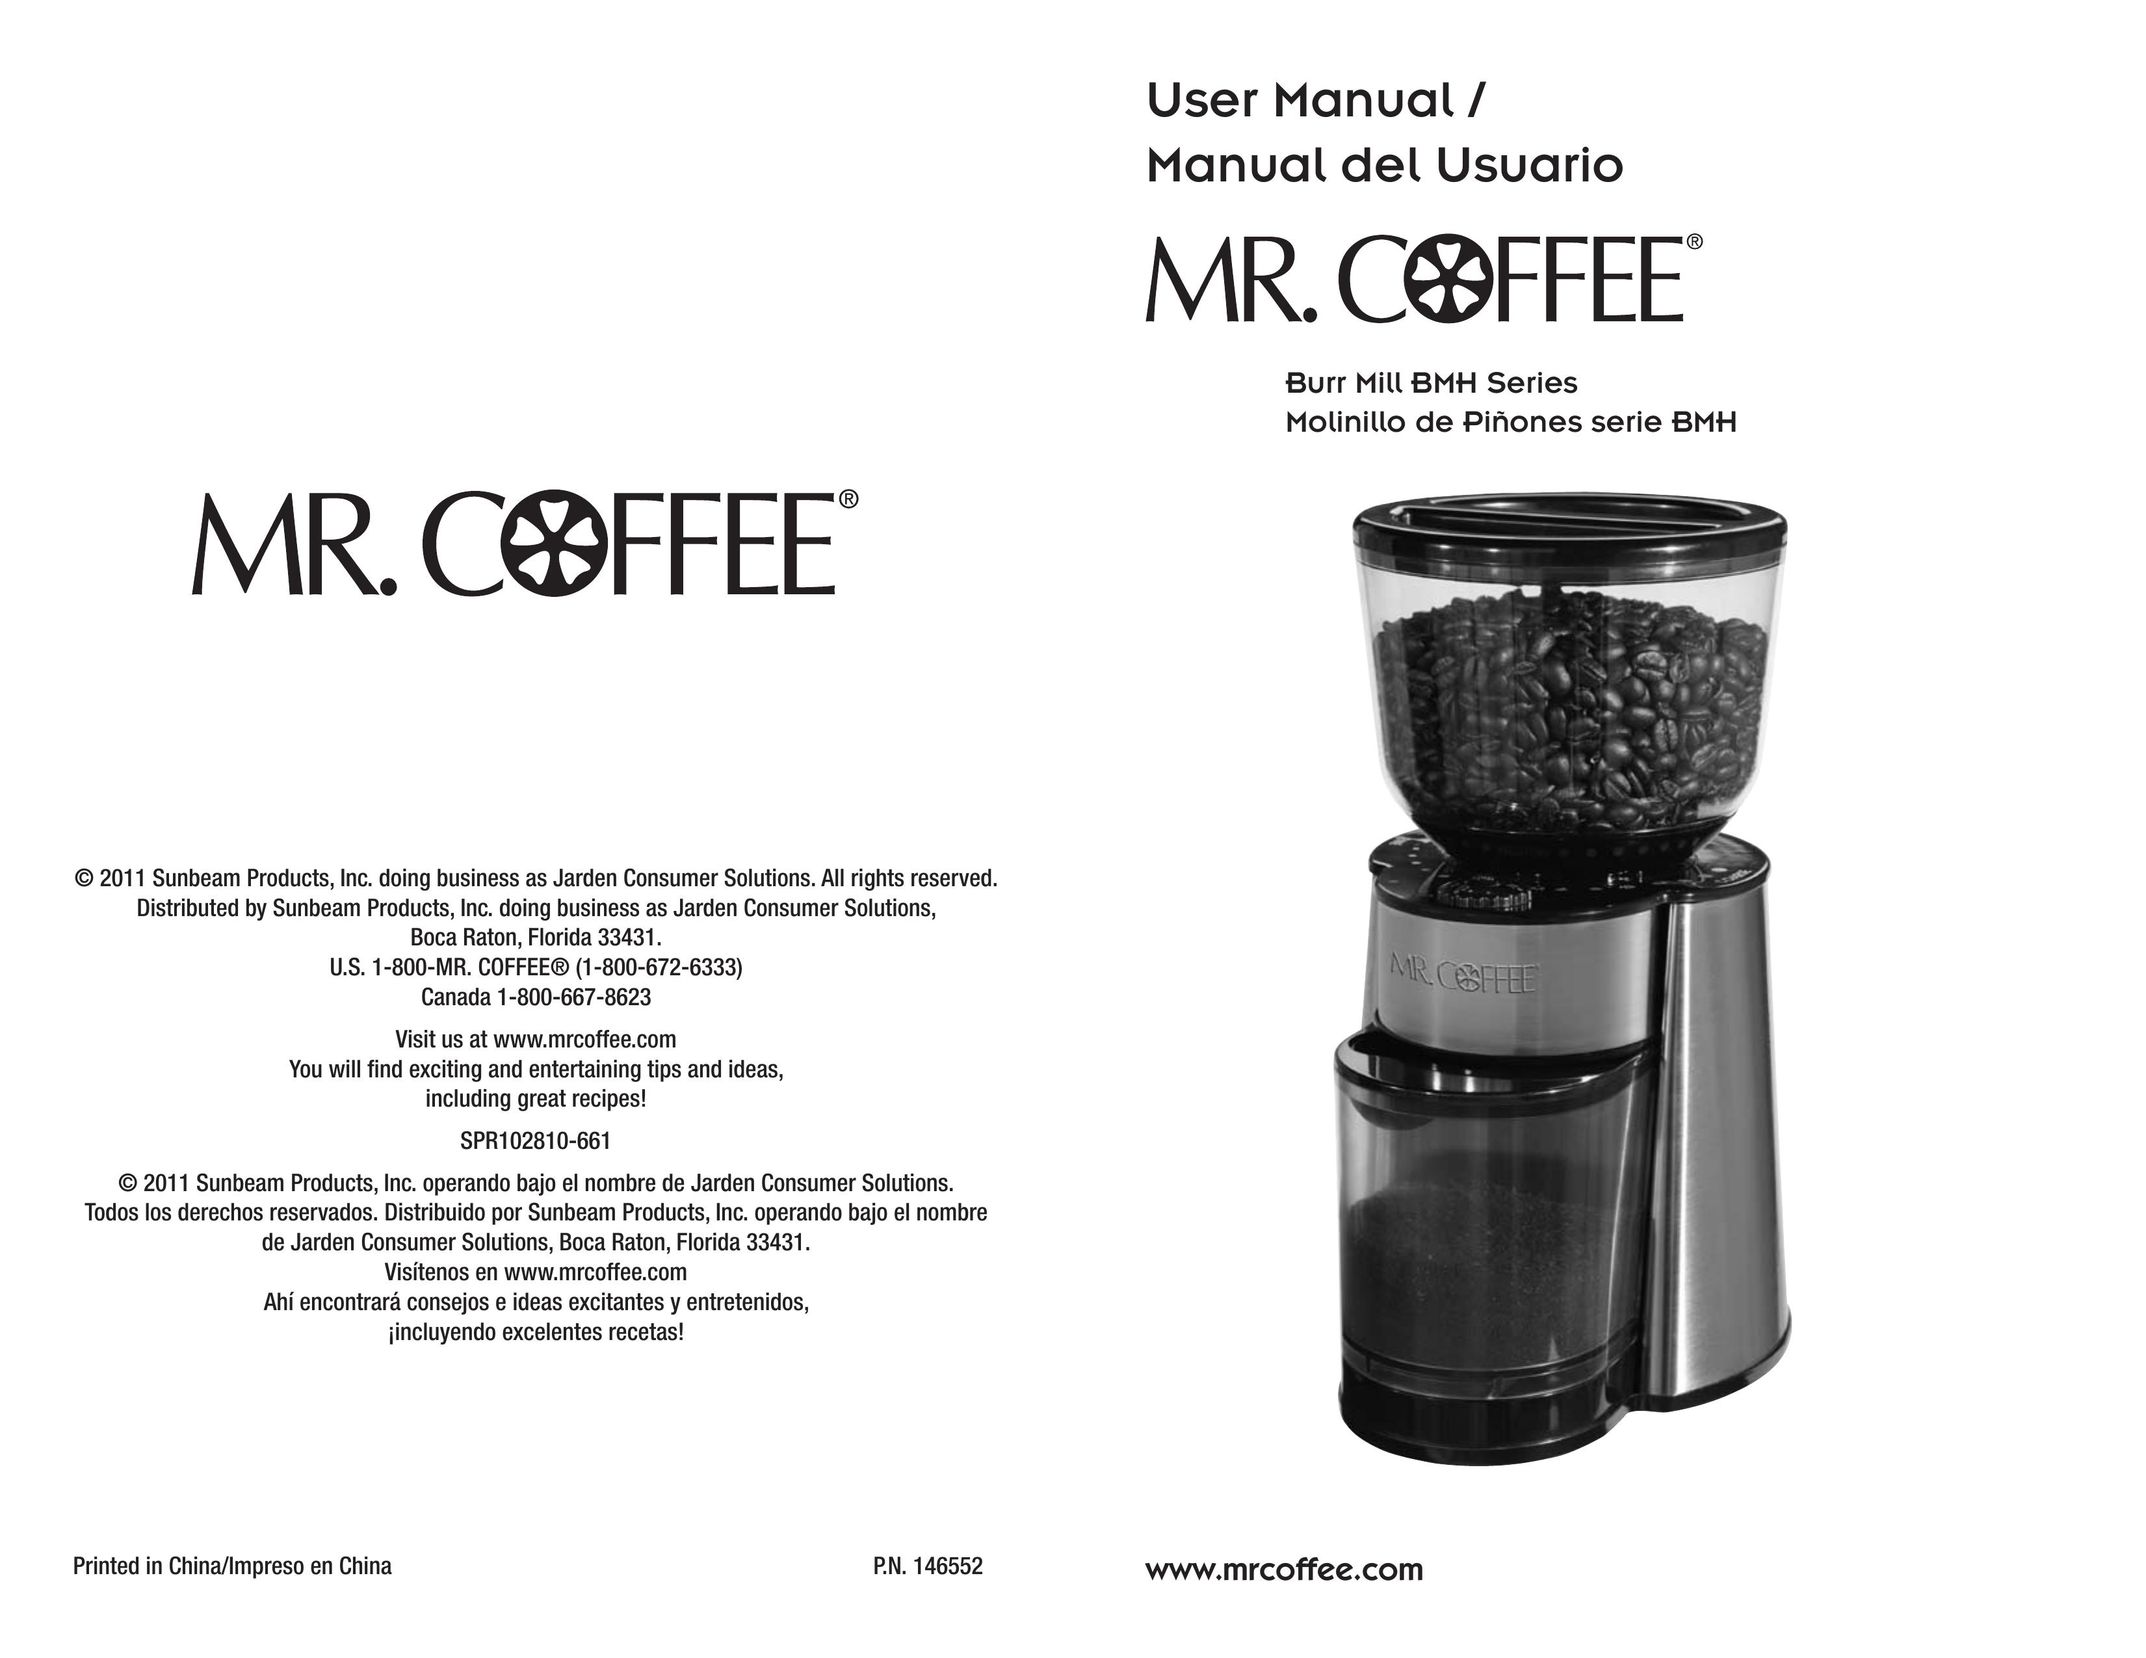 Mr. Coffee BMH Coffee Grinder User Manual